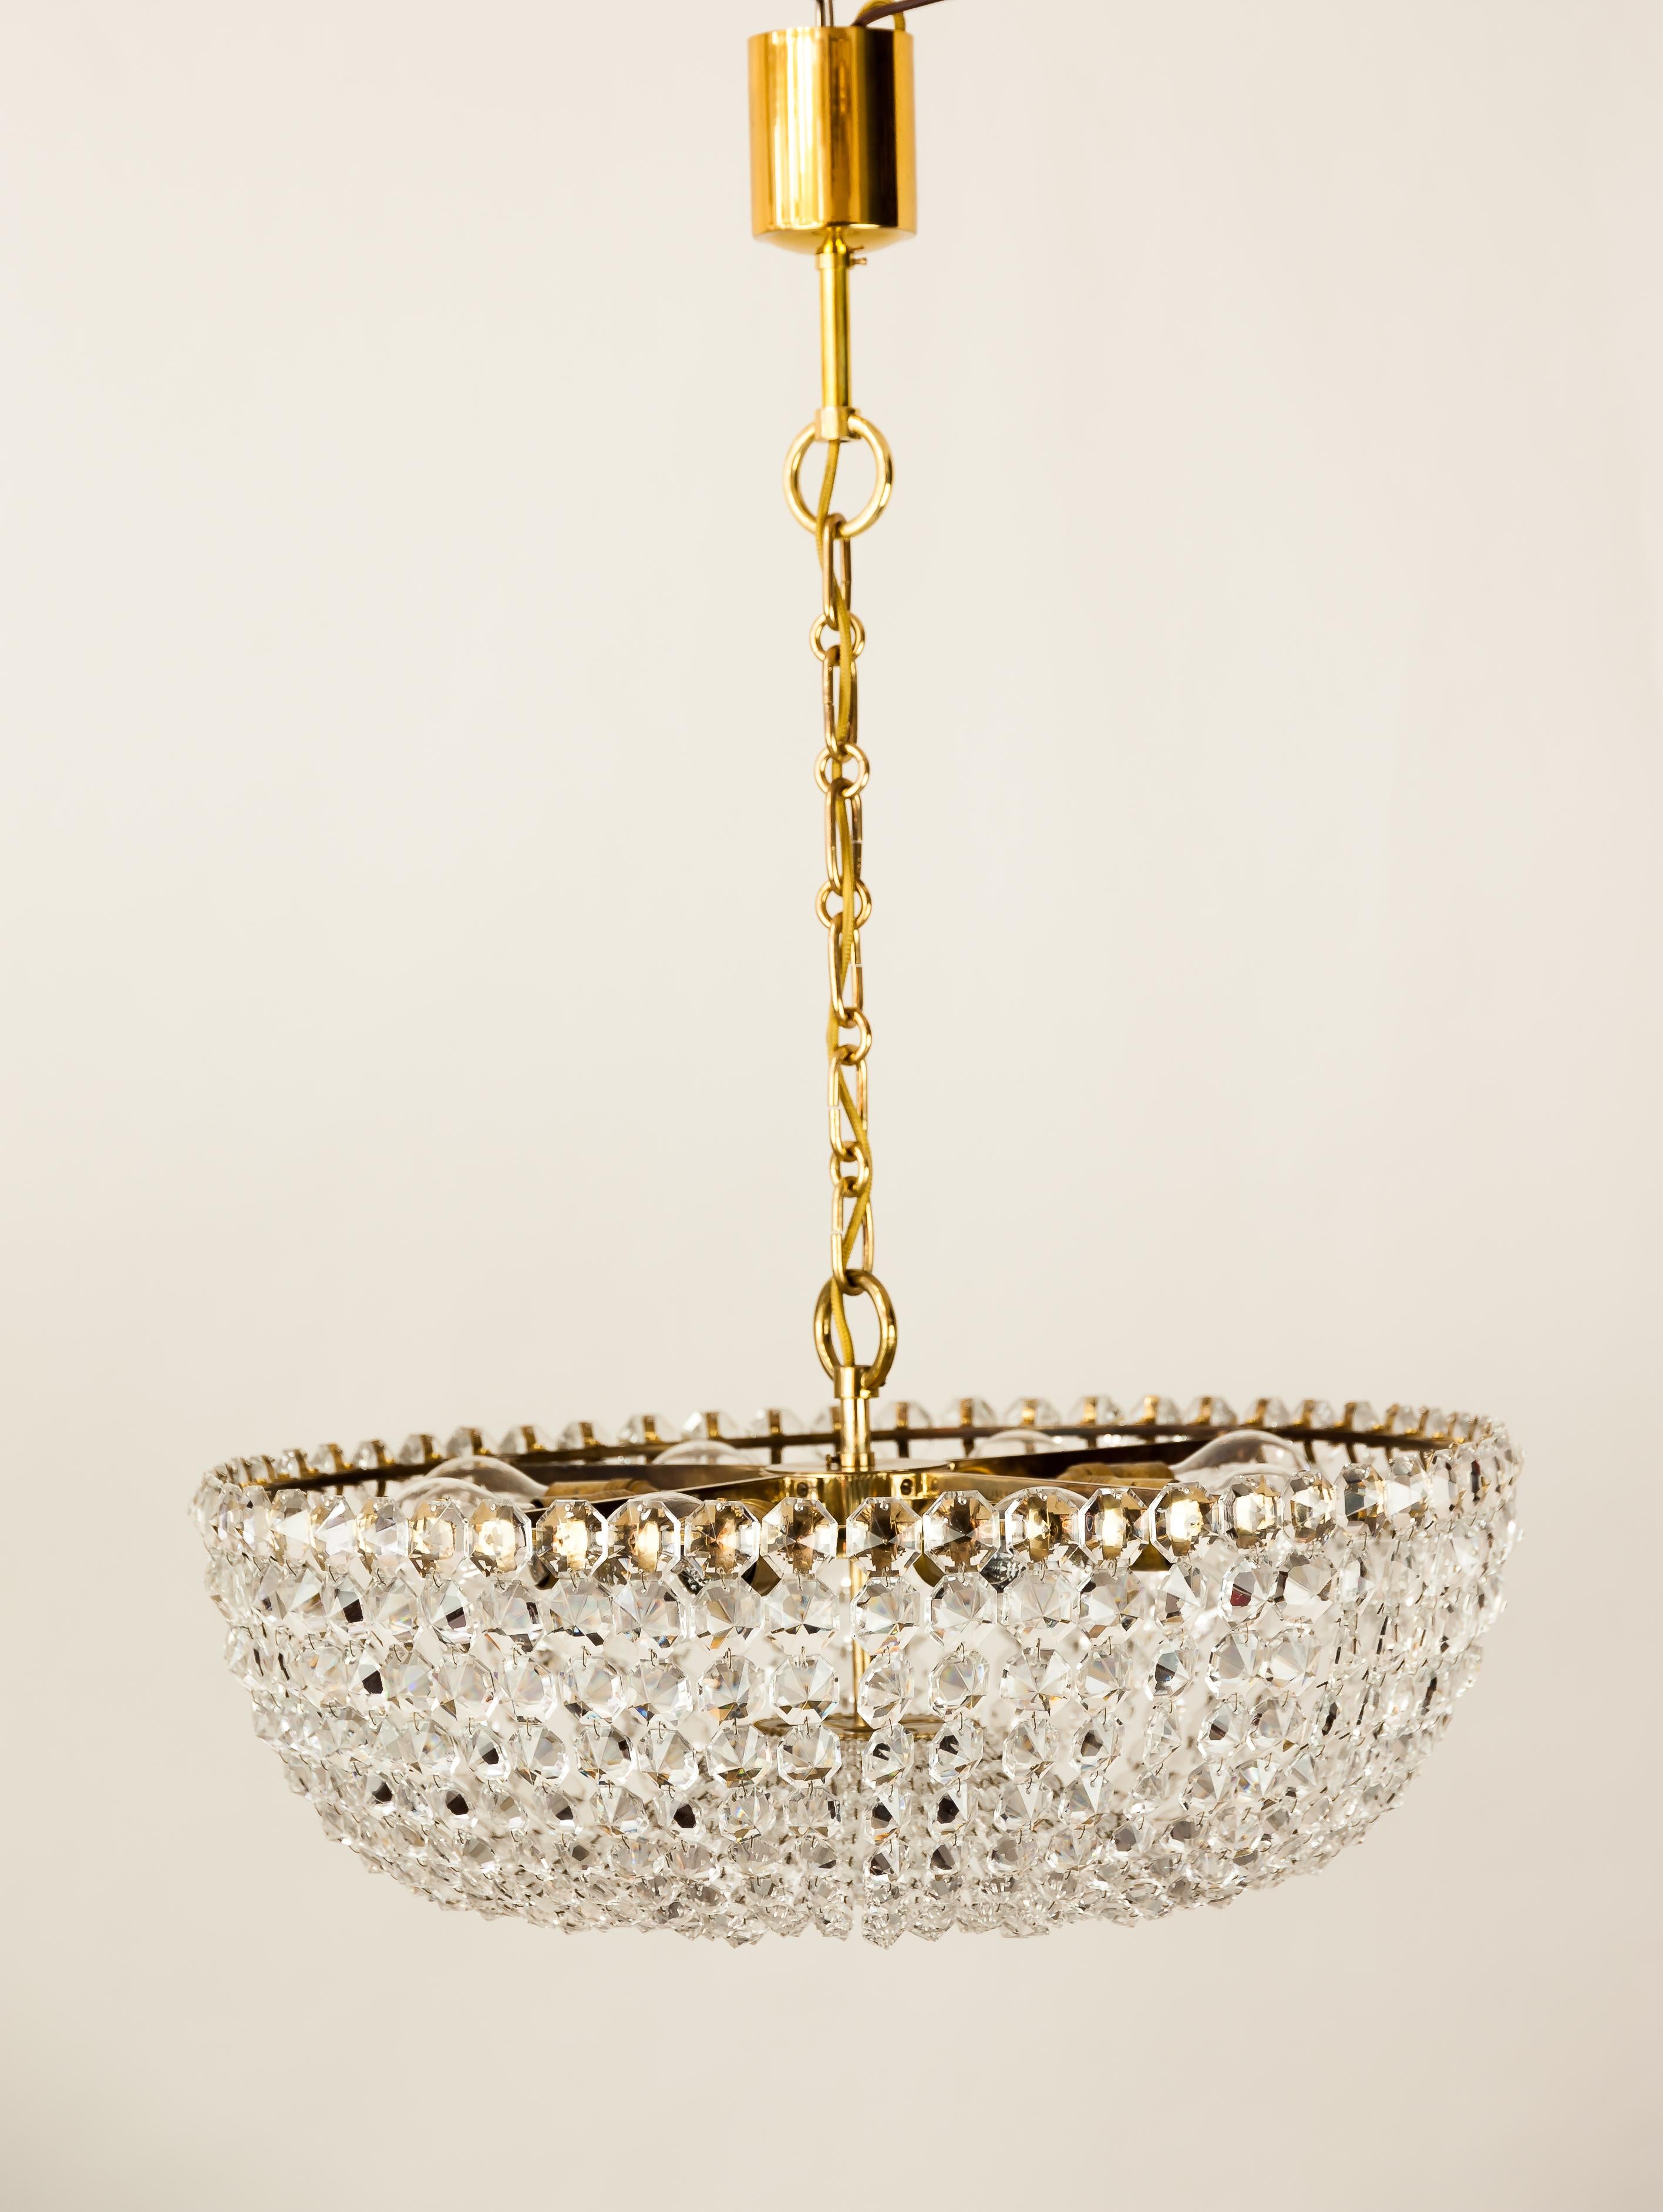 J.L Lobmeyr chandelier around 1950s ( Signed )
Good original condition
8 Bulbs